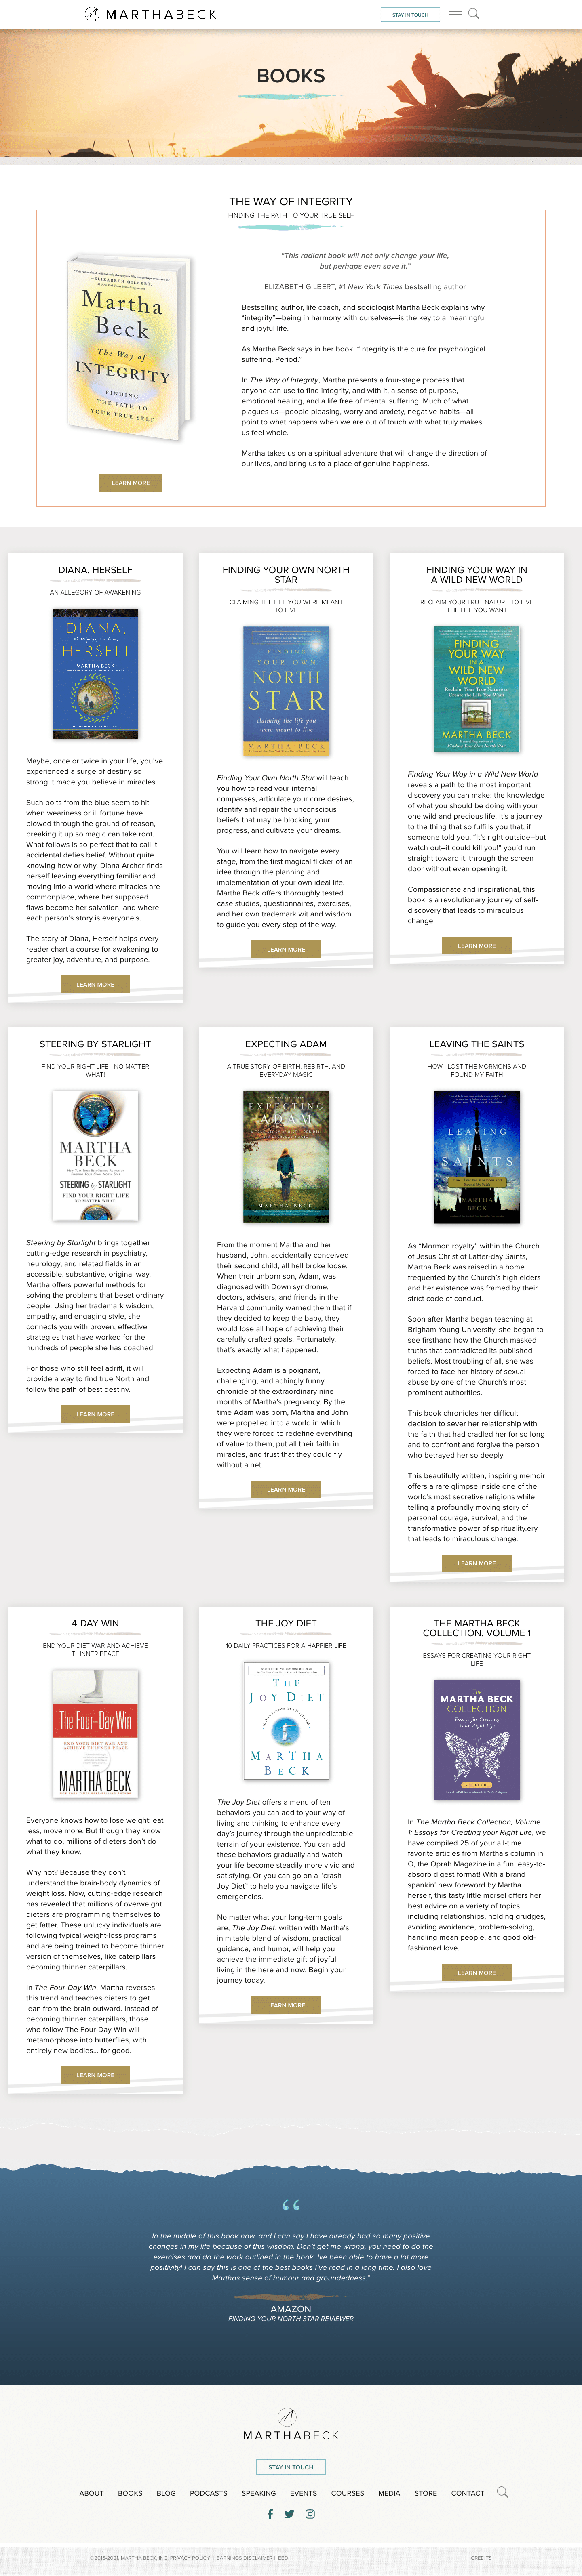 Martha Beck website books page.